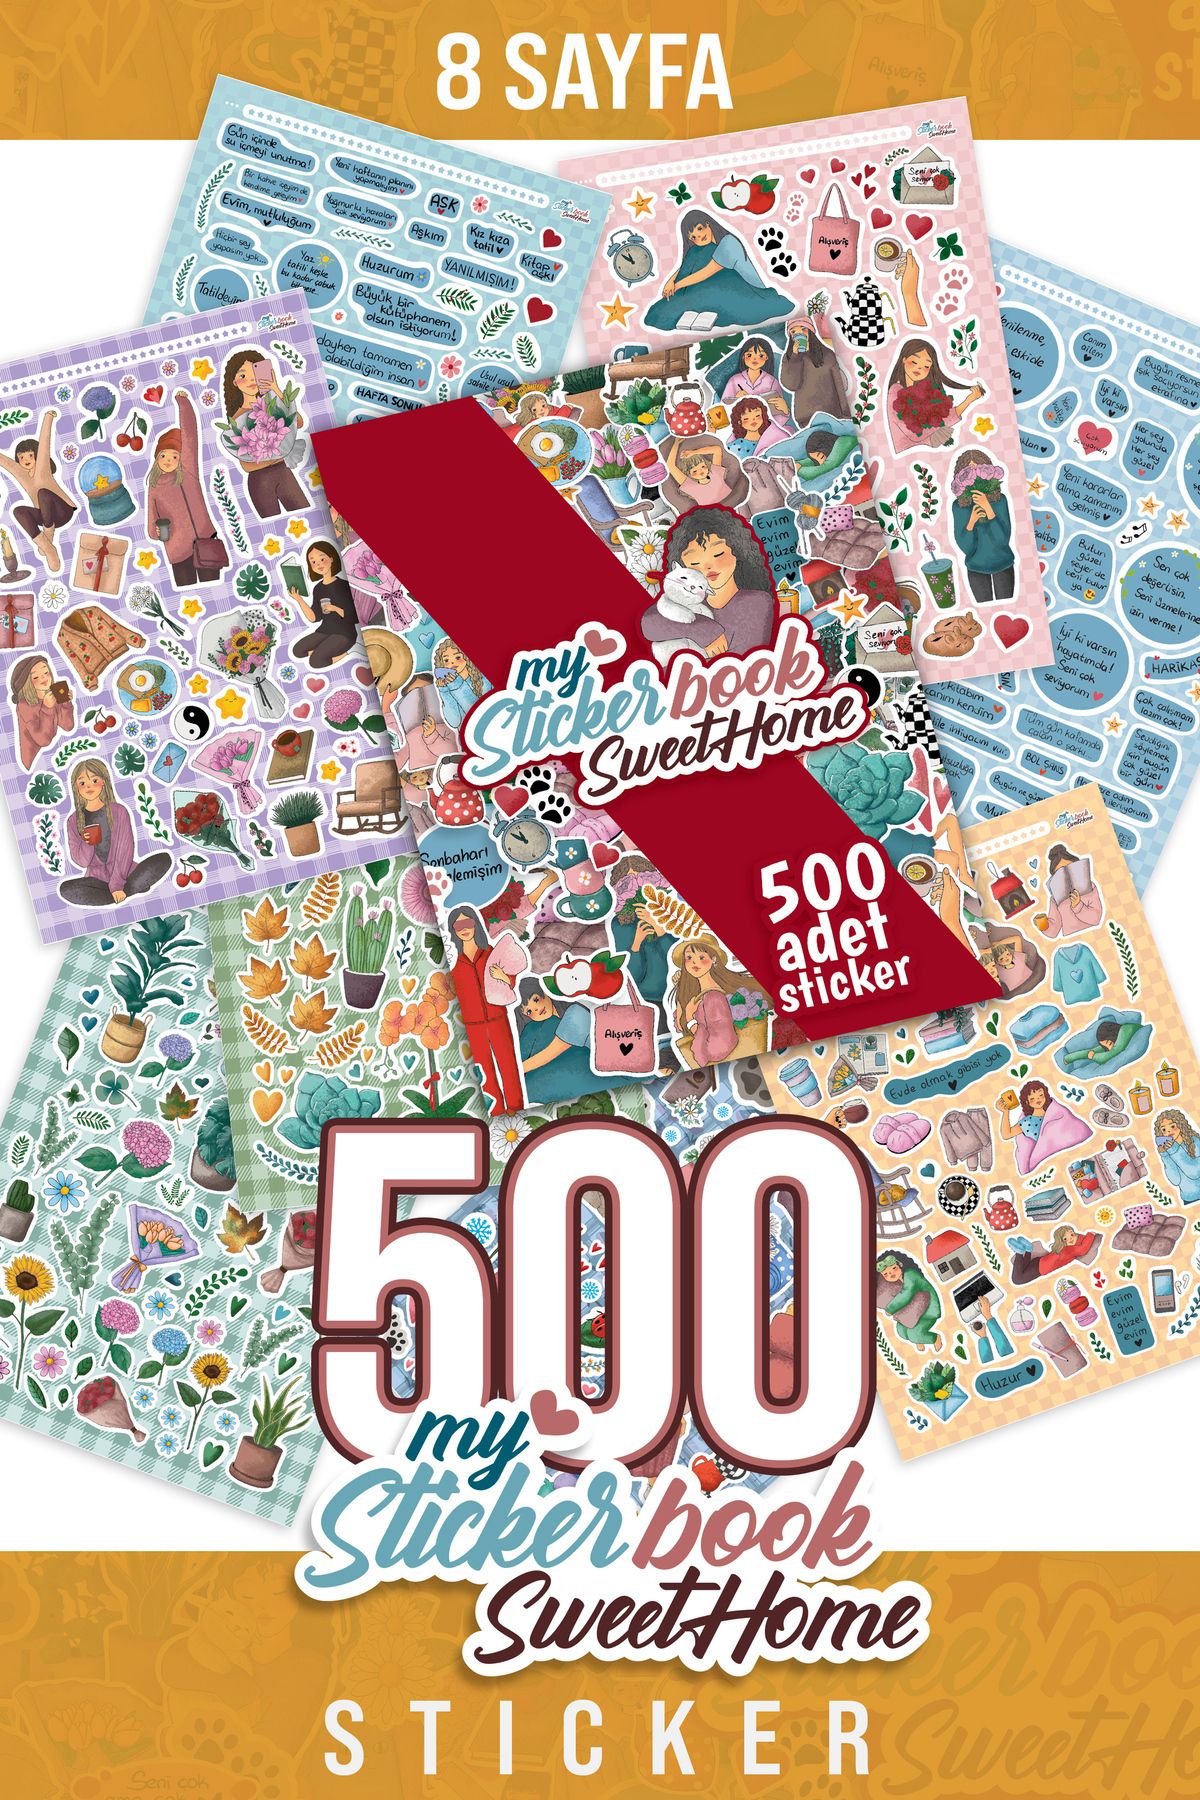 colortouch Sweet Home Sticker Set - 500 Adet Etiket - Ajanda, Günlük, Planlayıcı, Bullet Journal , Sticker Book